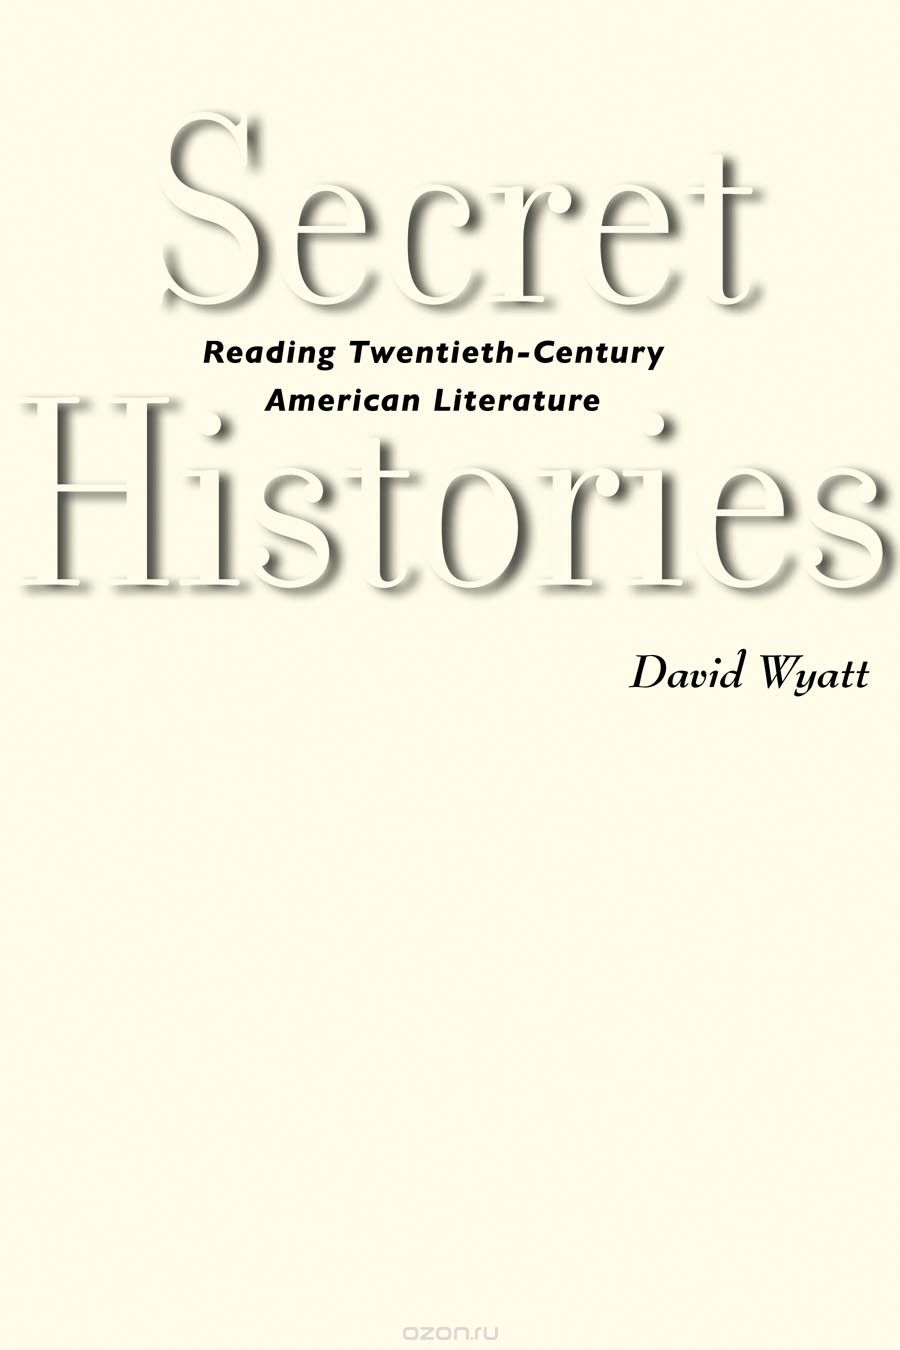 Secret Histories – Reading Twentieth–Century American Literature